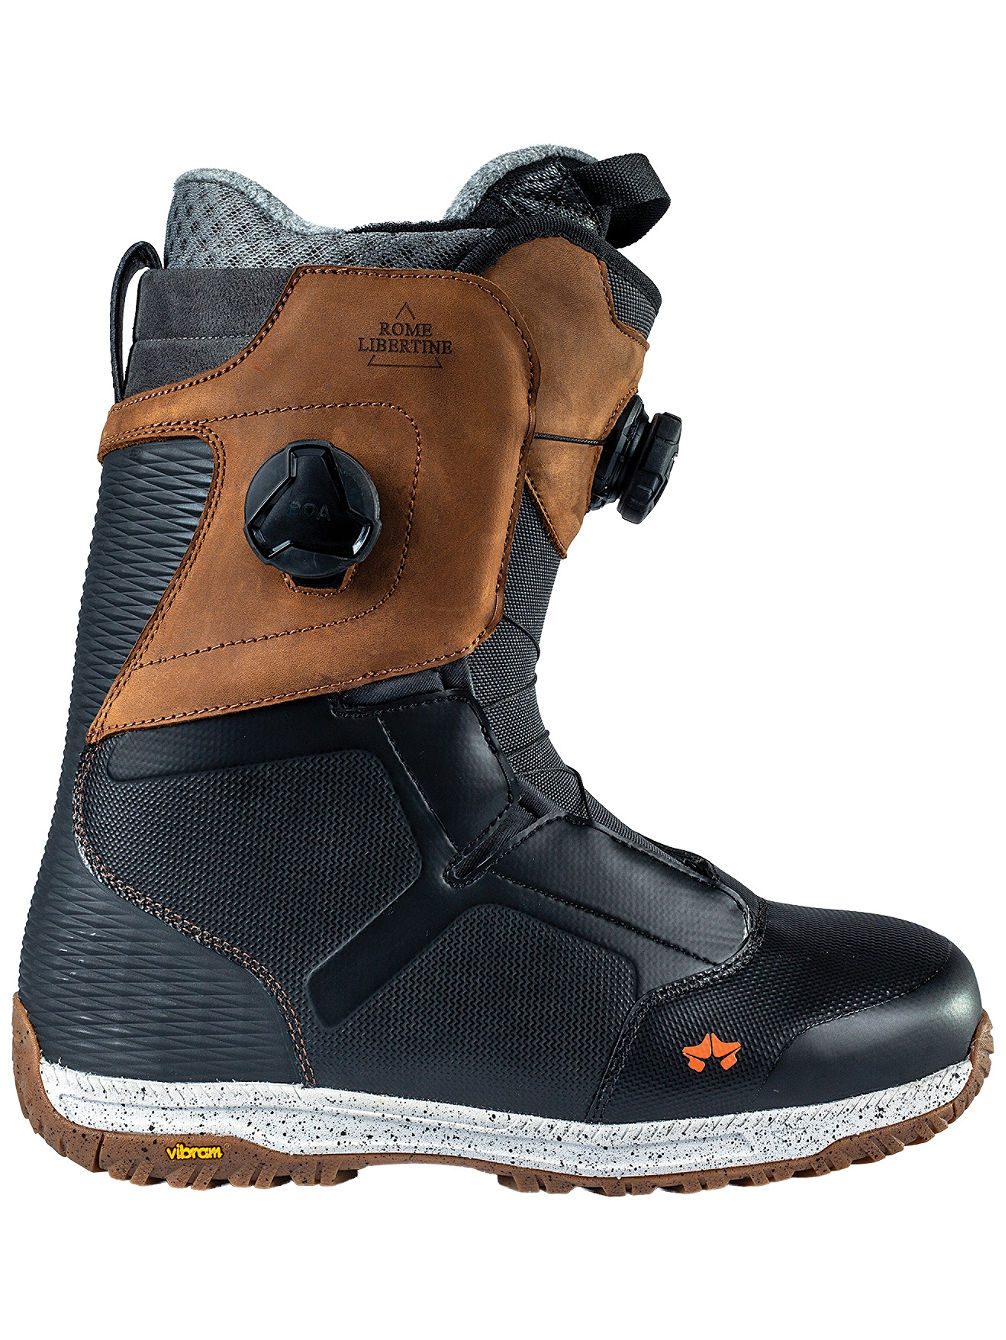 Libertine Boa 2022 Snowboard Boots